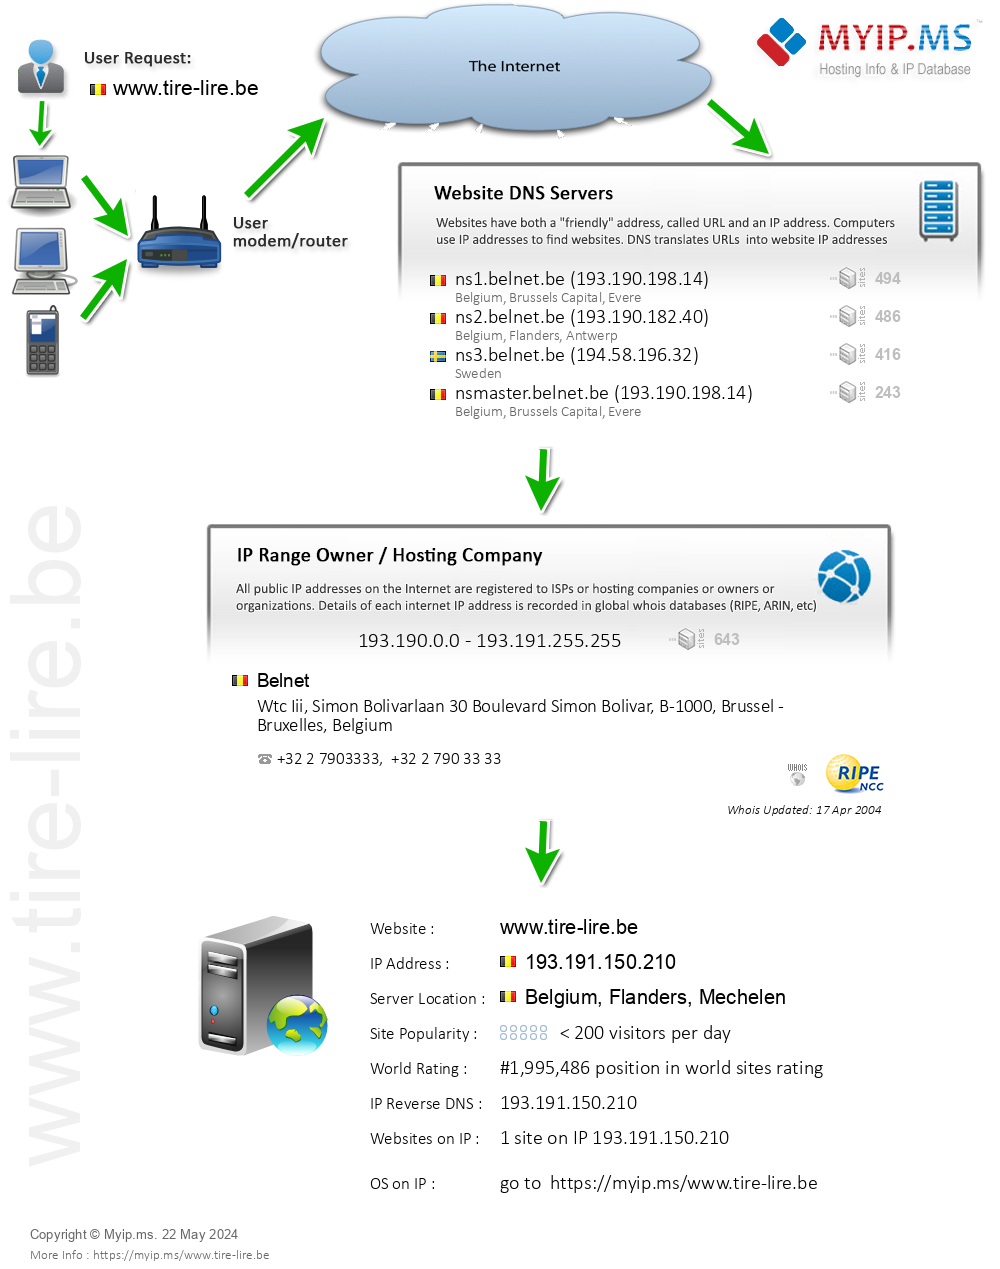 Tire-lire.be - Website Hosting Visual IP Diagram